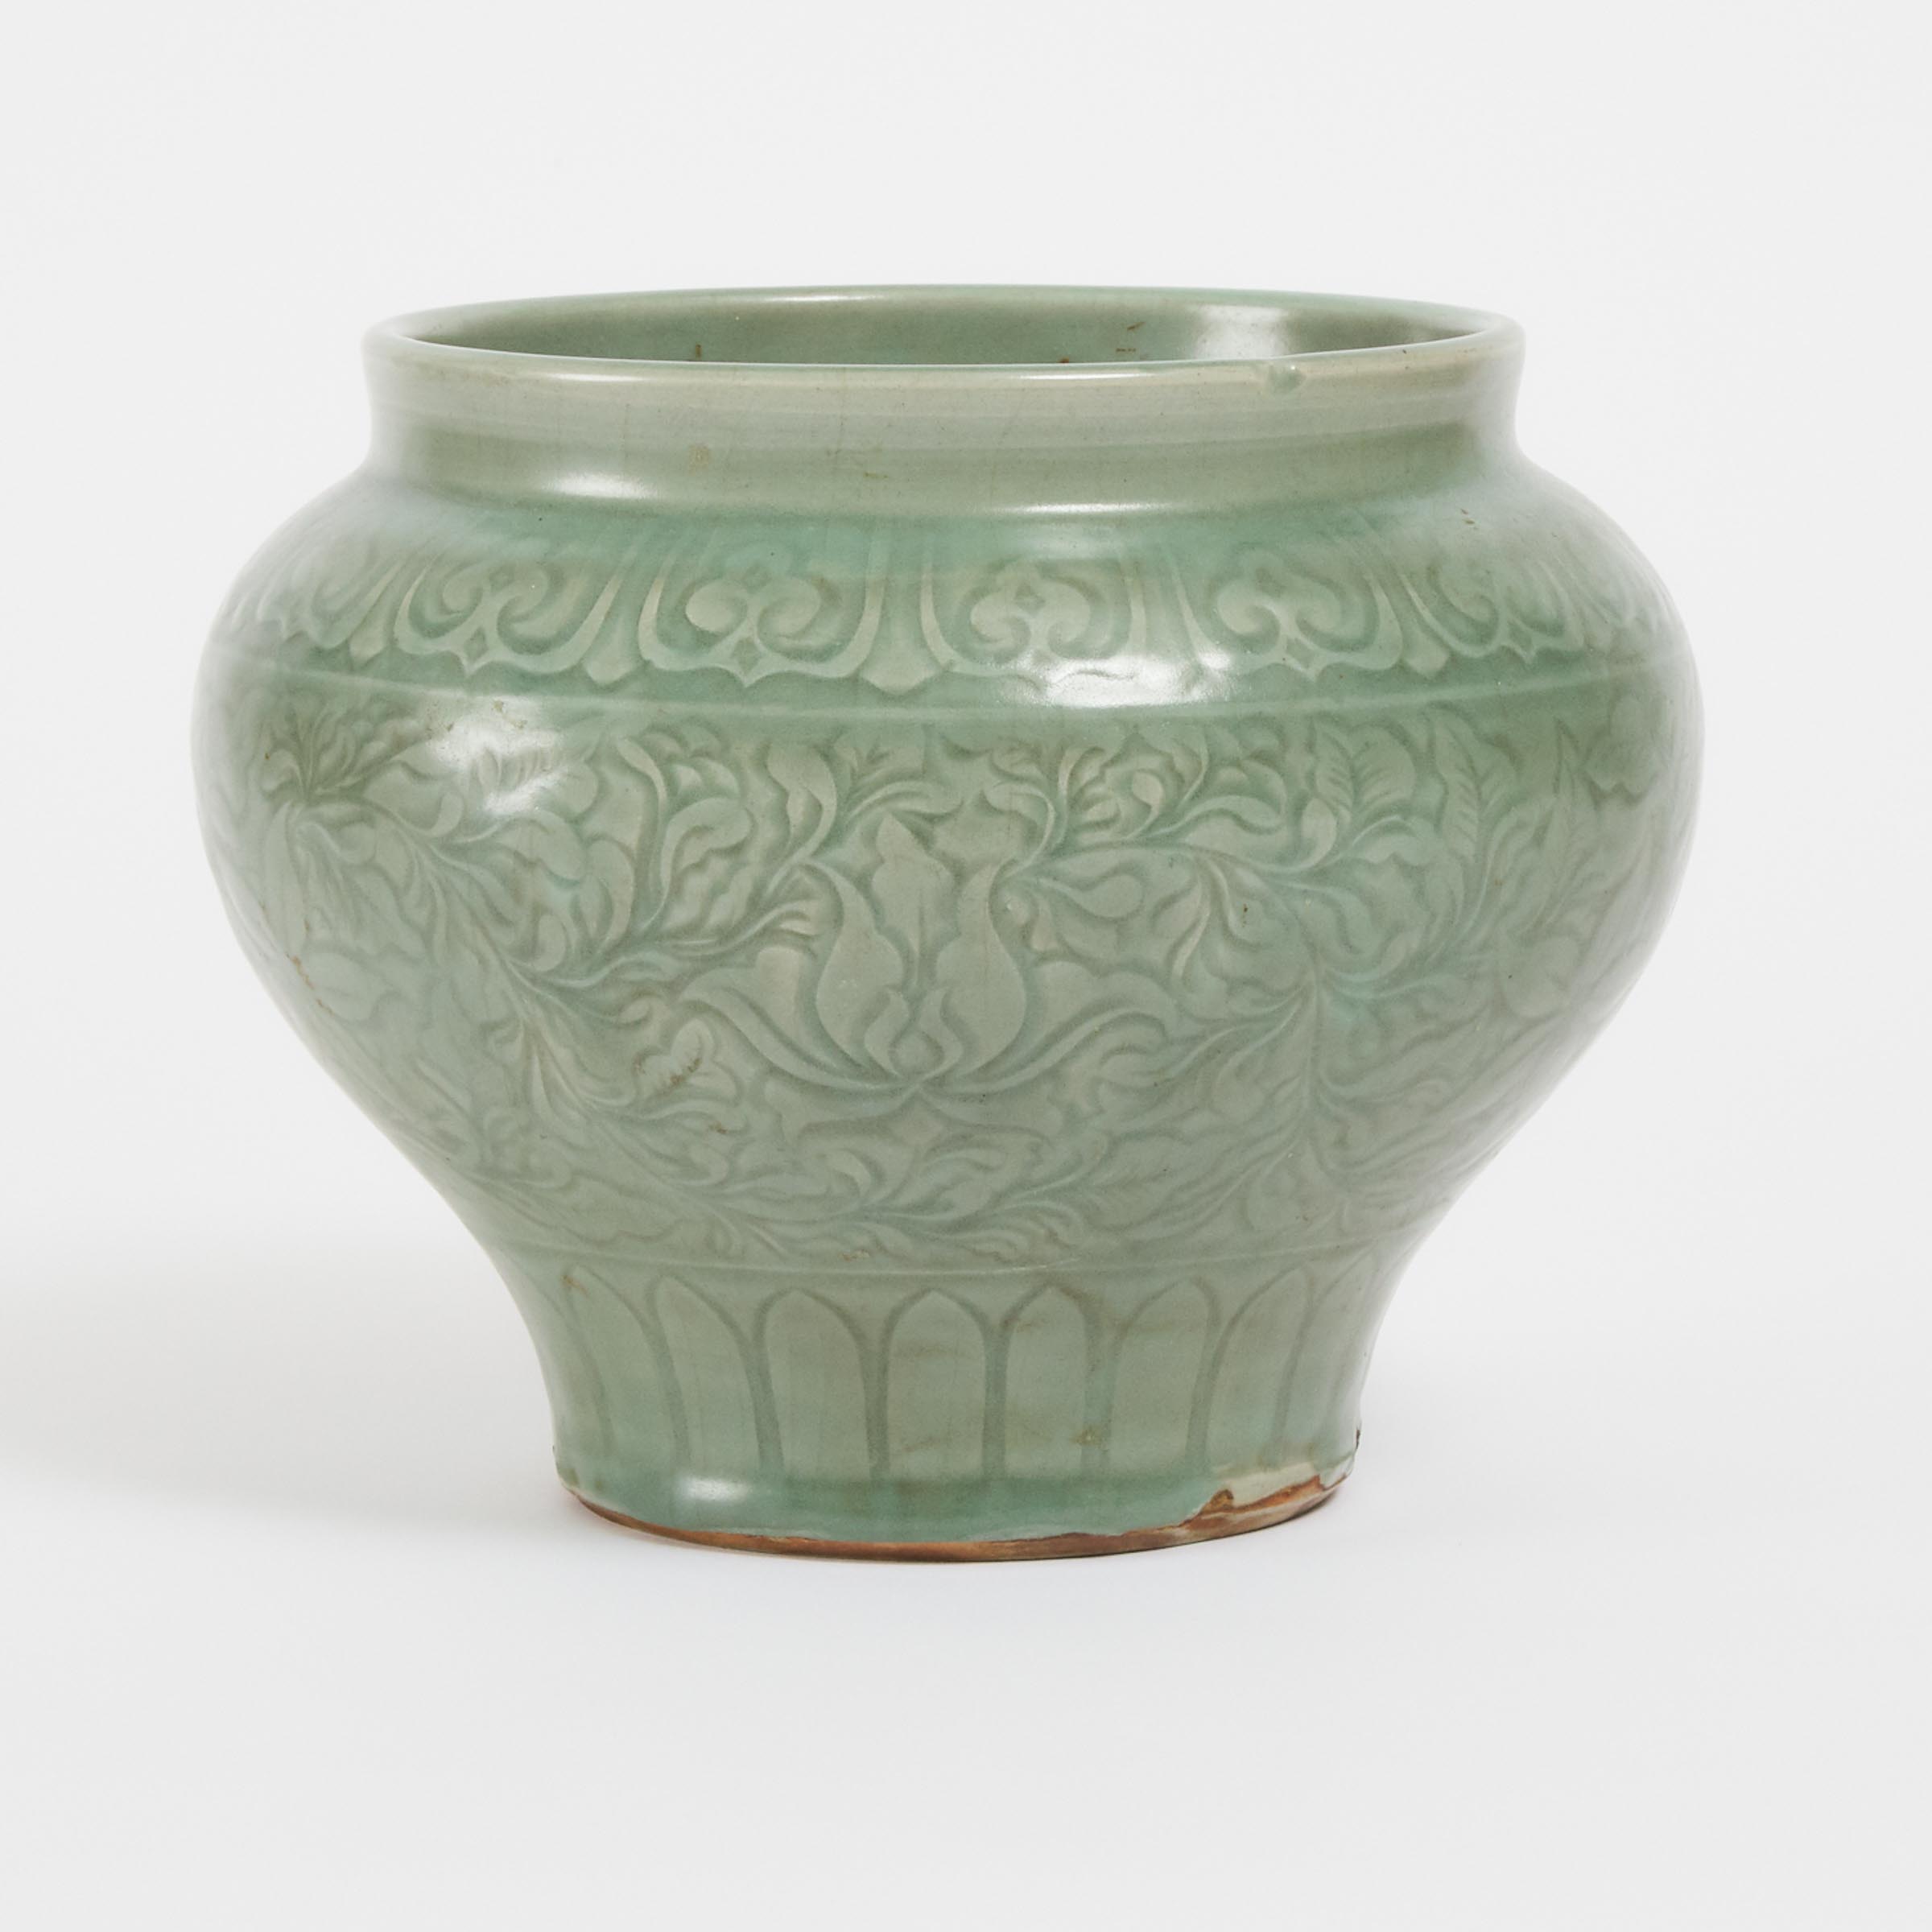 A Longquan Celadon-Glazed Jar, Ming Dynasty or Later